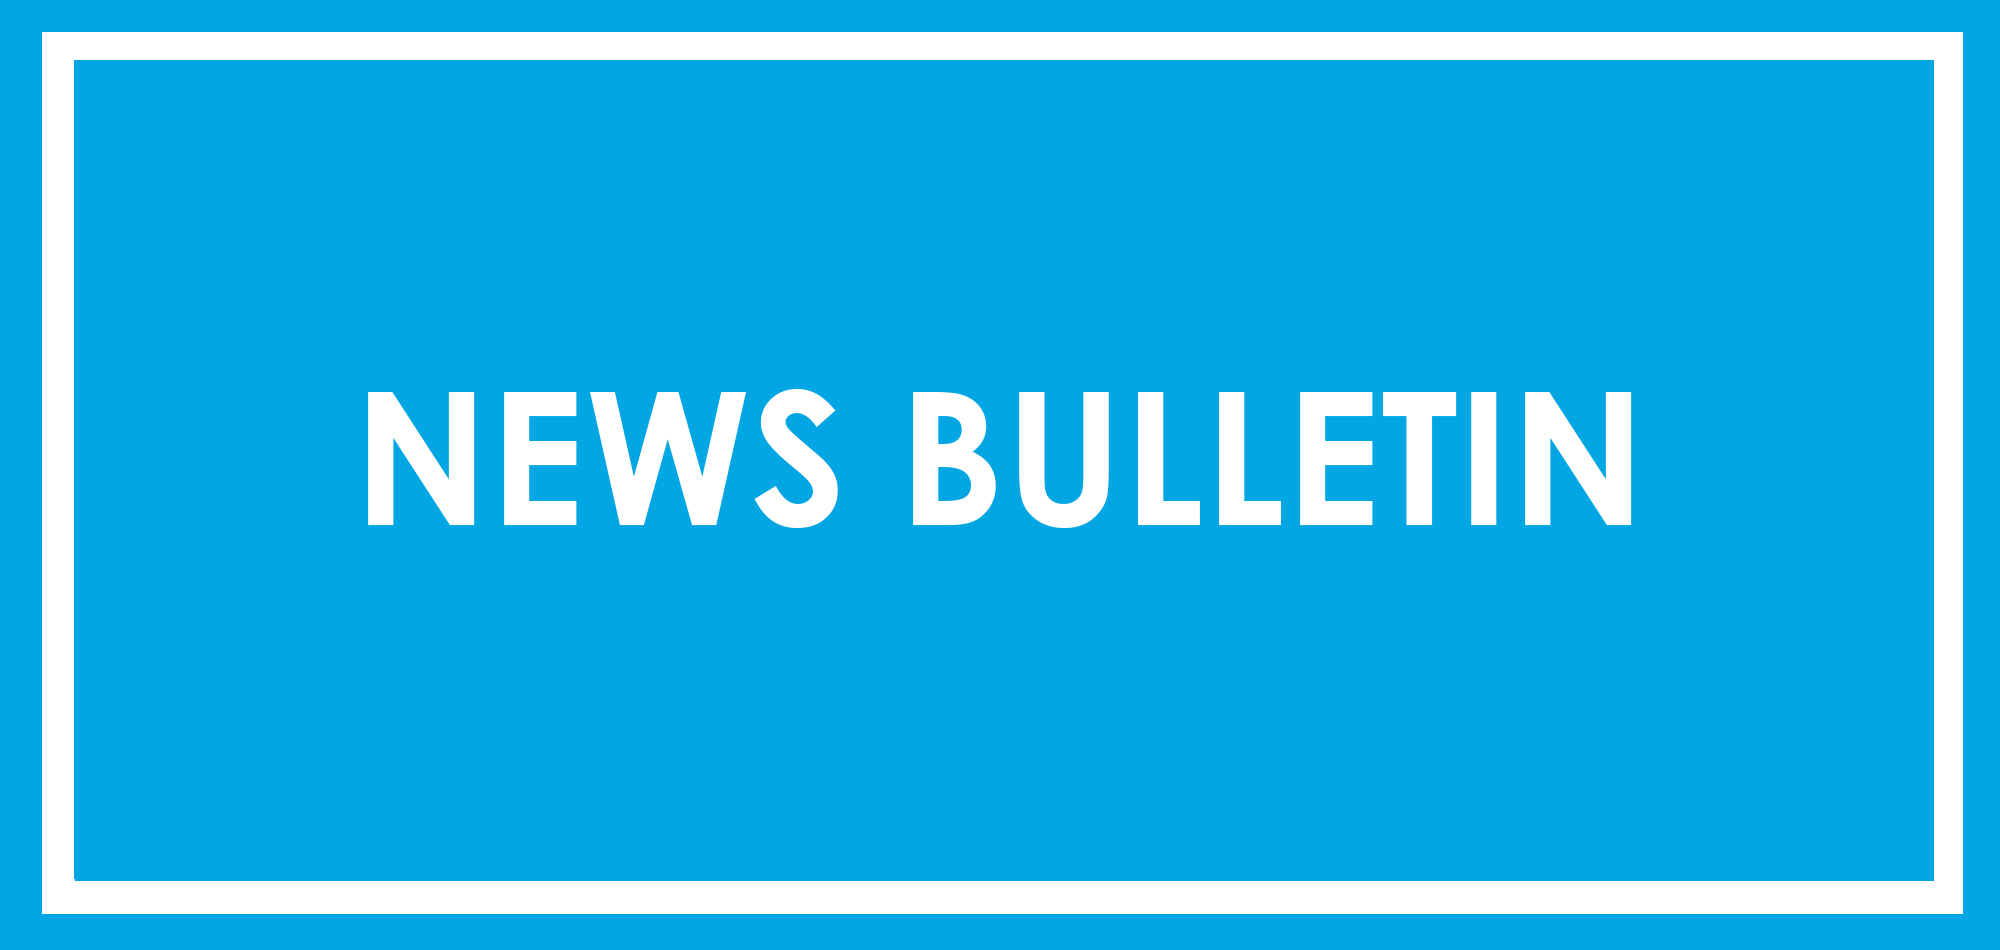 News Bulletin - 17.10.21